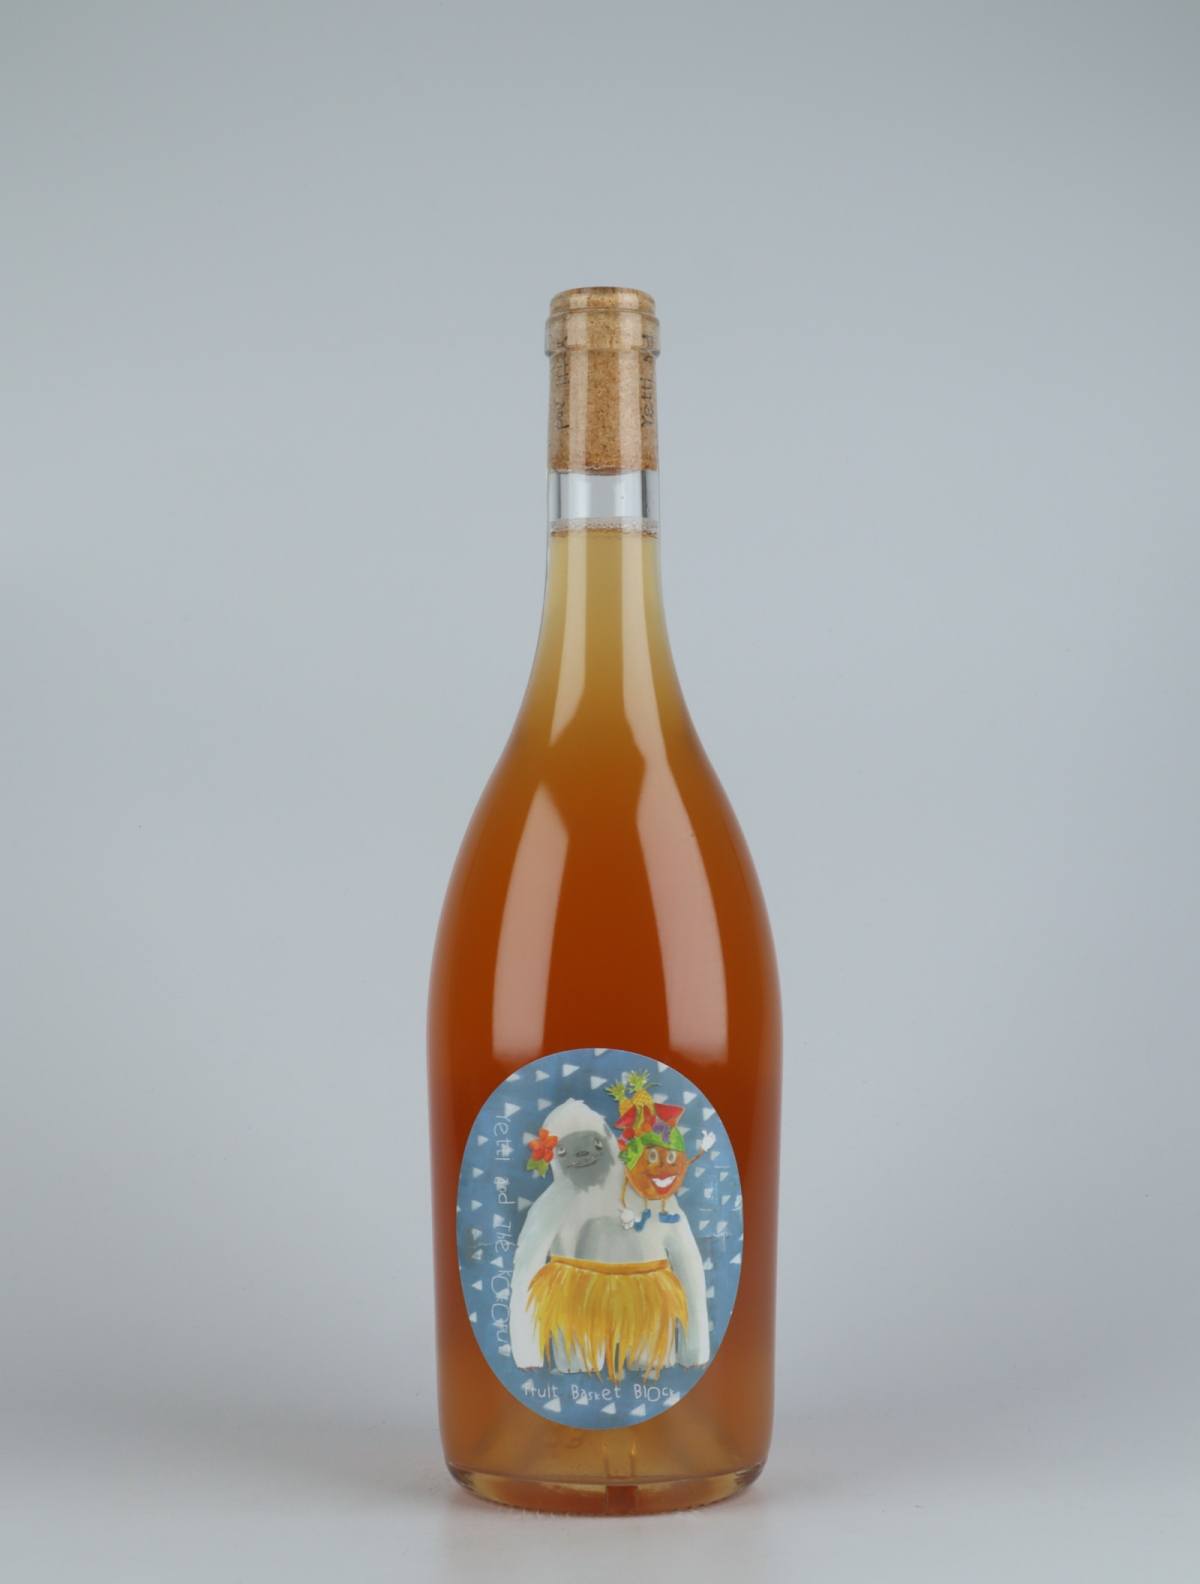 A bottle 2020 Fruit Basket White wine from Yetti and the Kokonut, Adelaide Hills in Australia